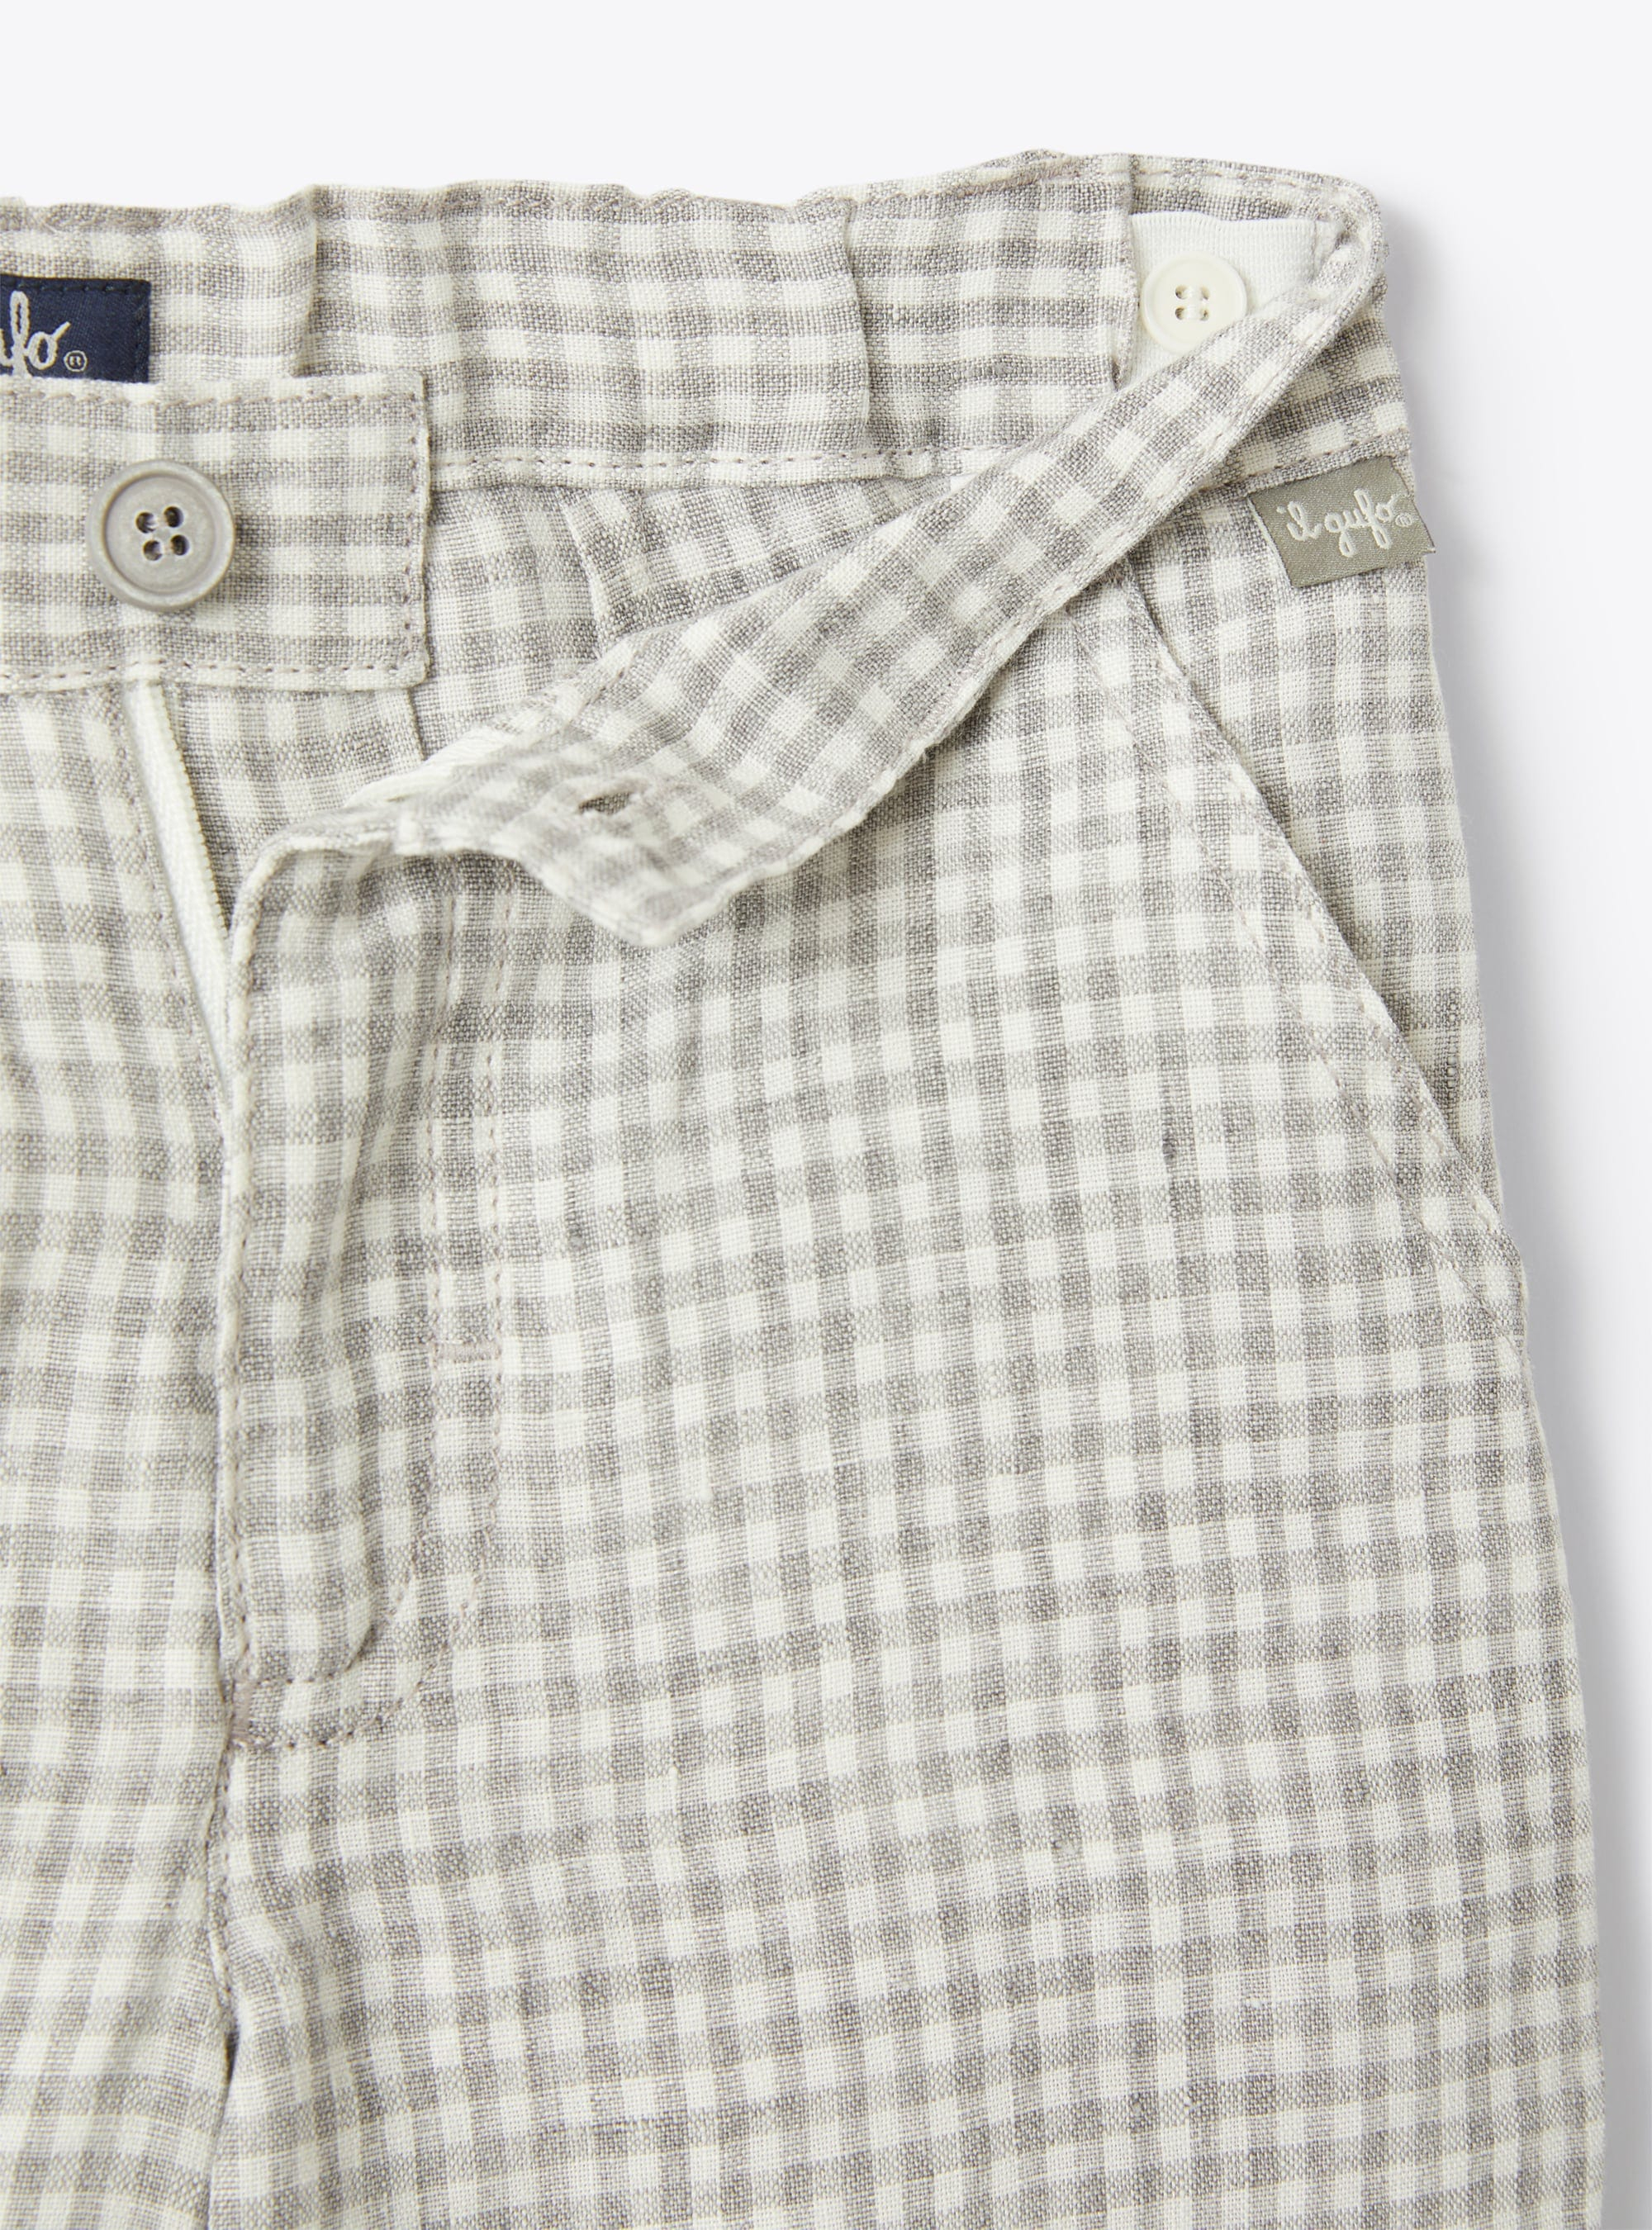 Bermuda shorts in gingham-check linen - Grey | Il Gufo